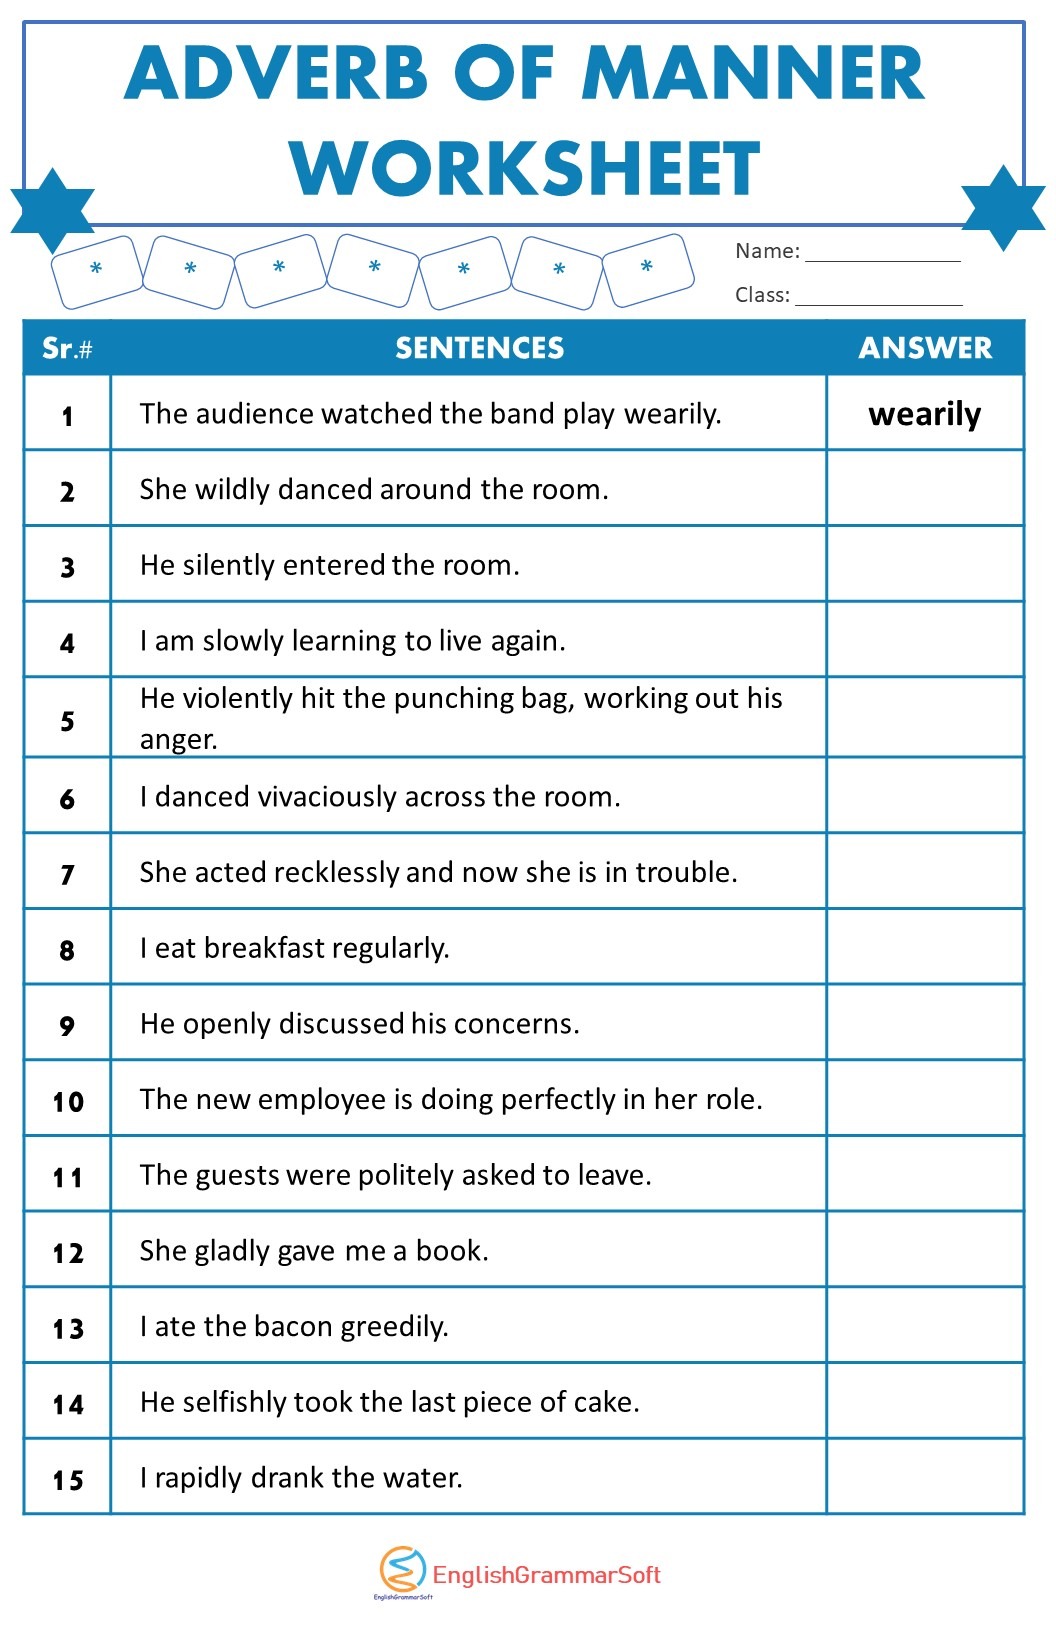 Adverb of Manner Worksheet